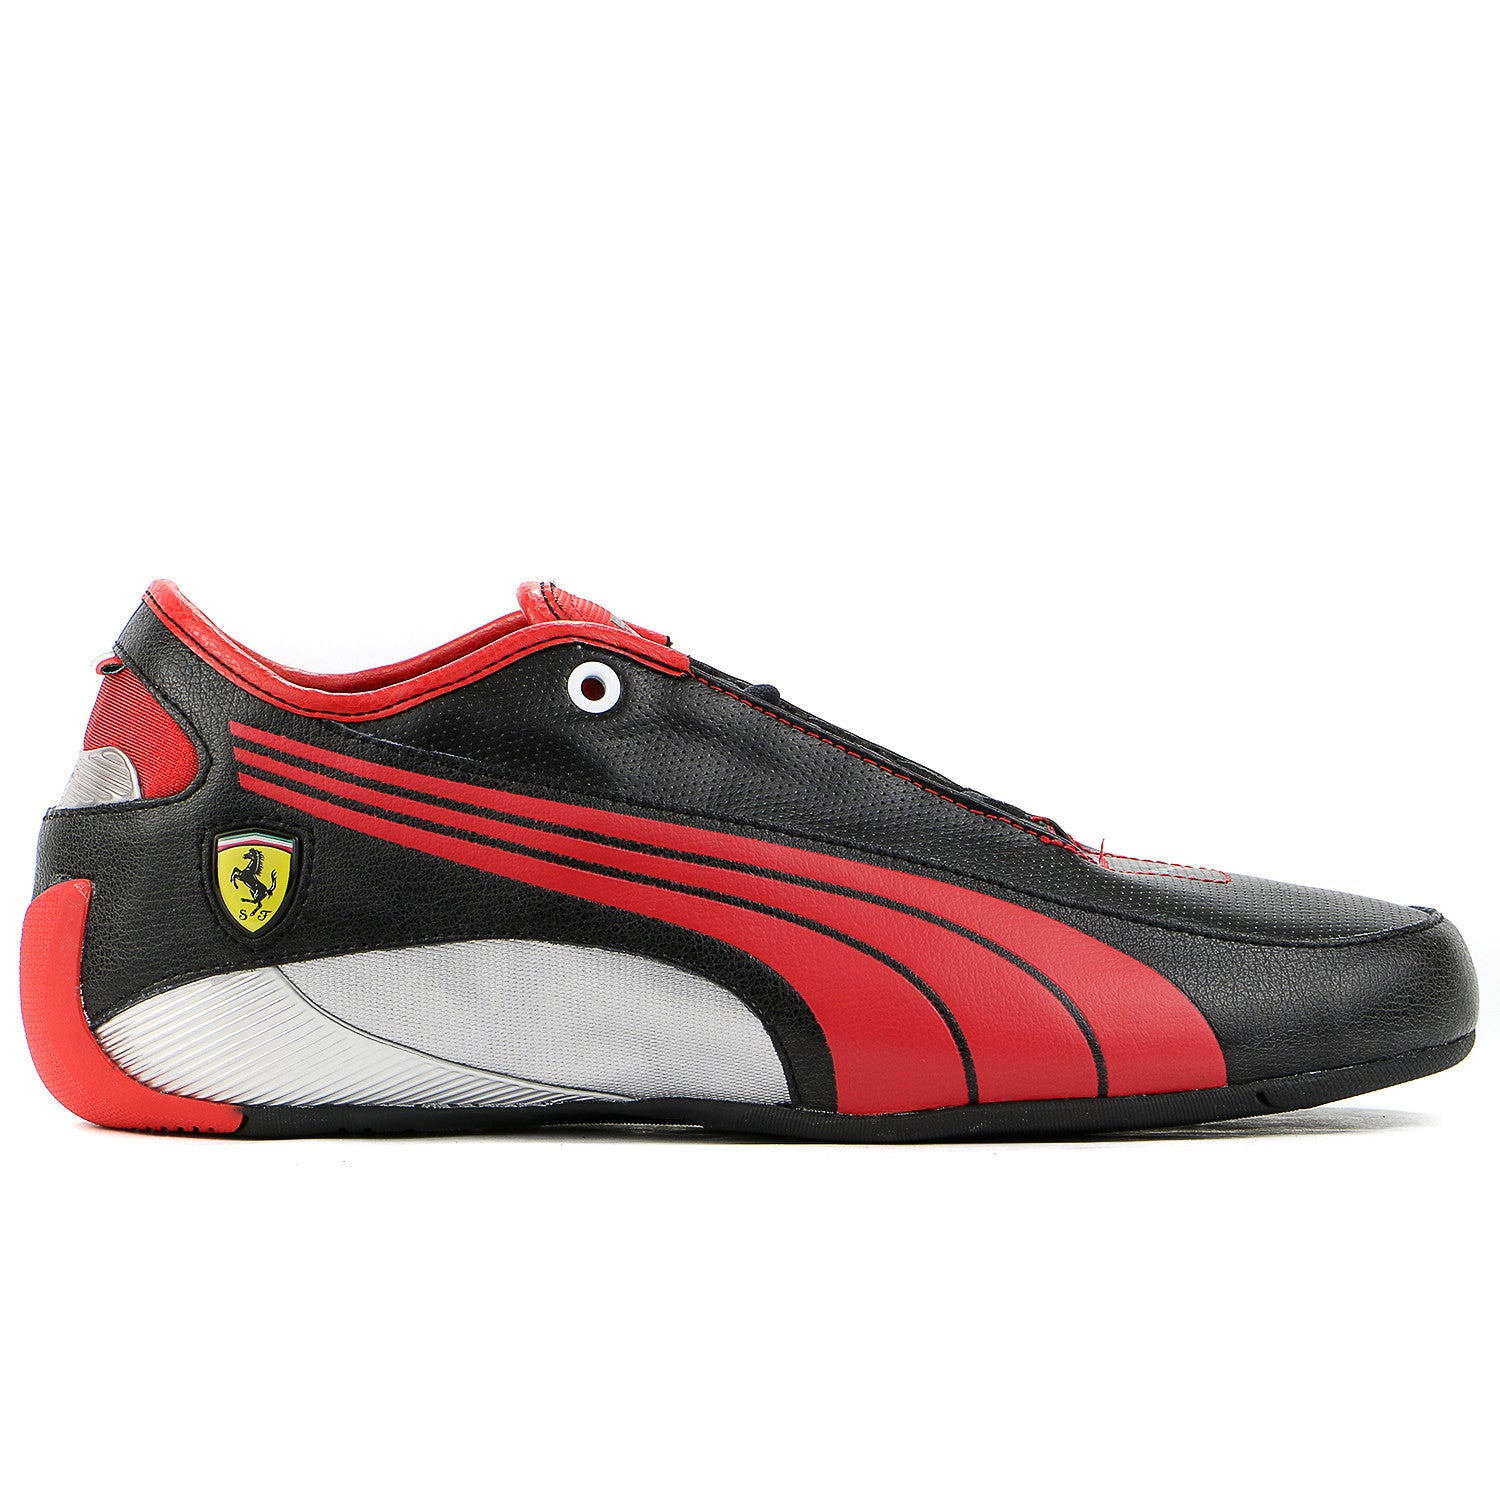 Puma Alekto Low SF NM Fashion Sneaker Shoe - Black/Rosso Corsa - Mens ...